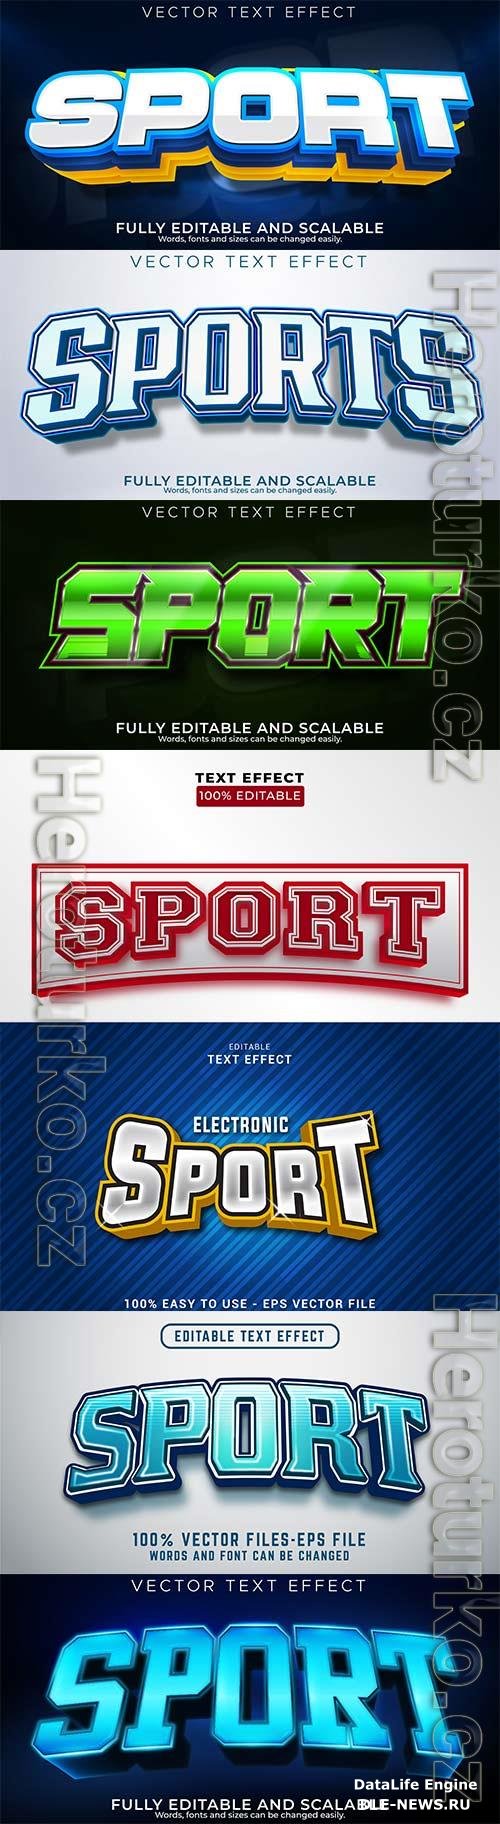 Sport 3d editable text style effect vector vol 251